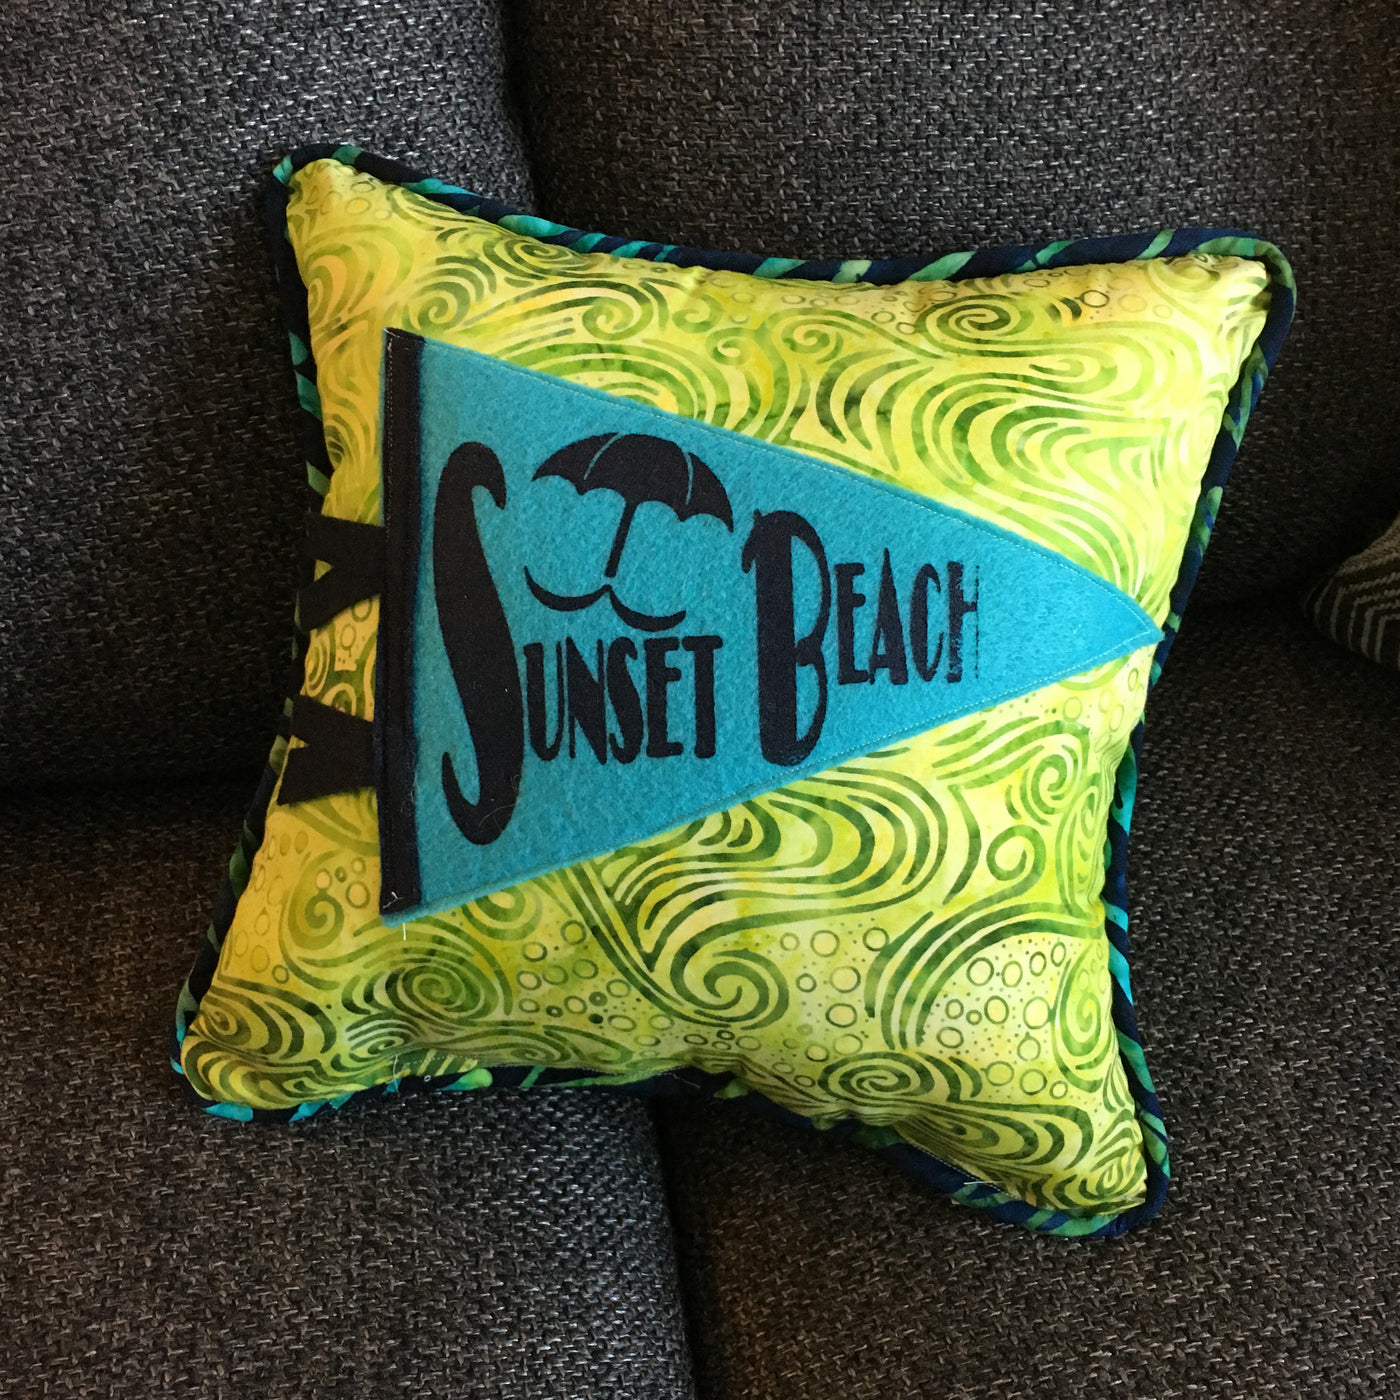 Sunset Beach pennant pillows - Pretty Clever Words